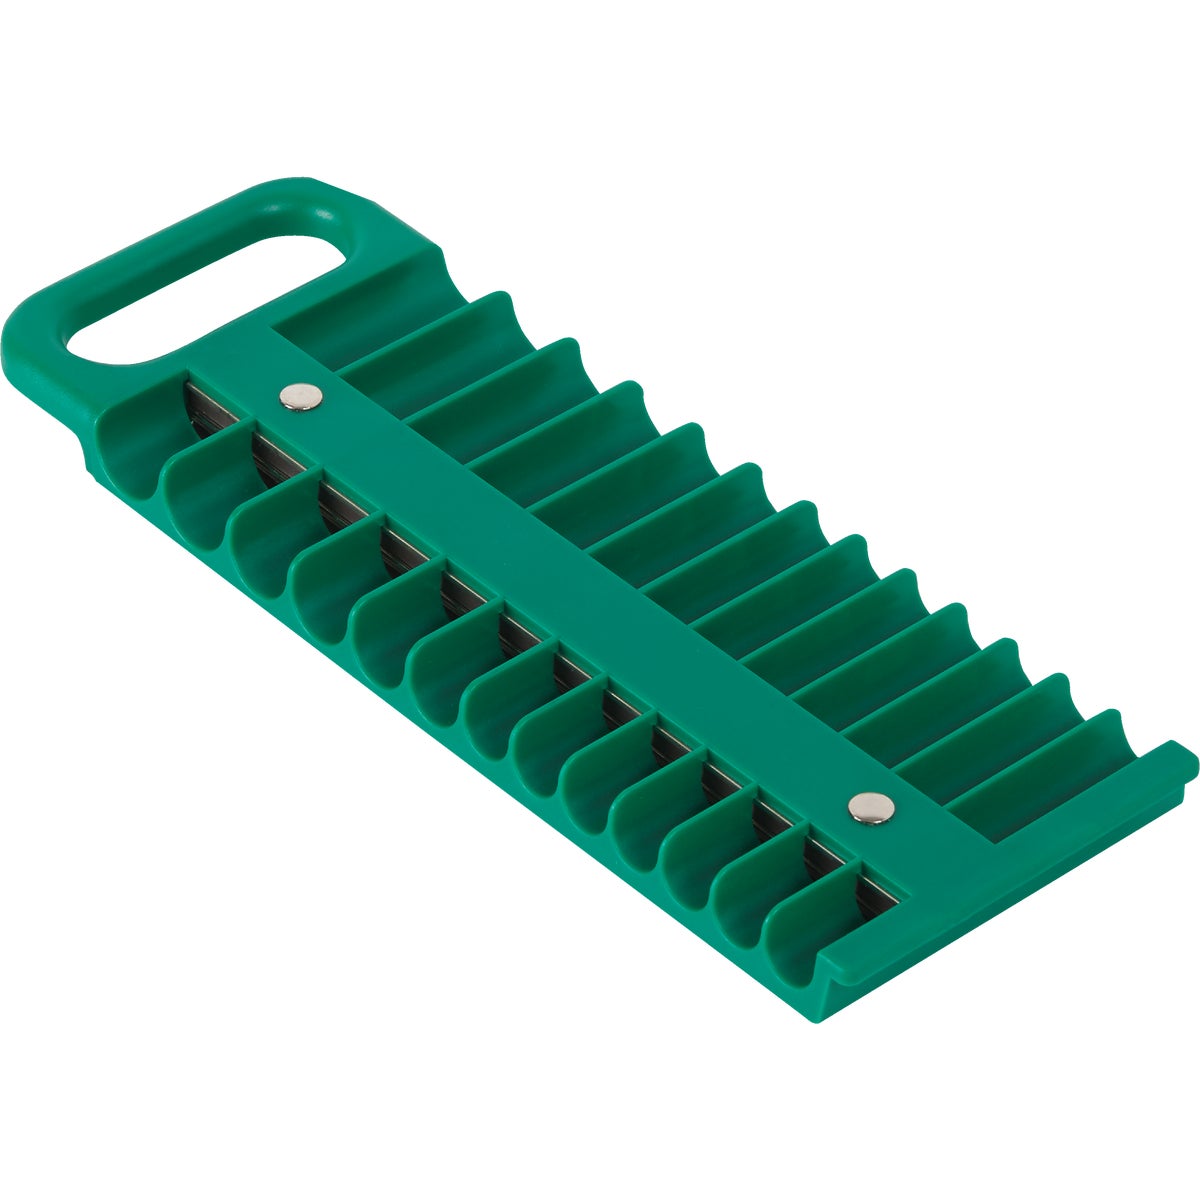 Item 301898, Socket tray made with ABS (acrylonitrile butadiene styrene) high-impact 